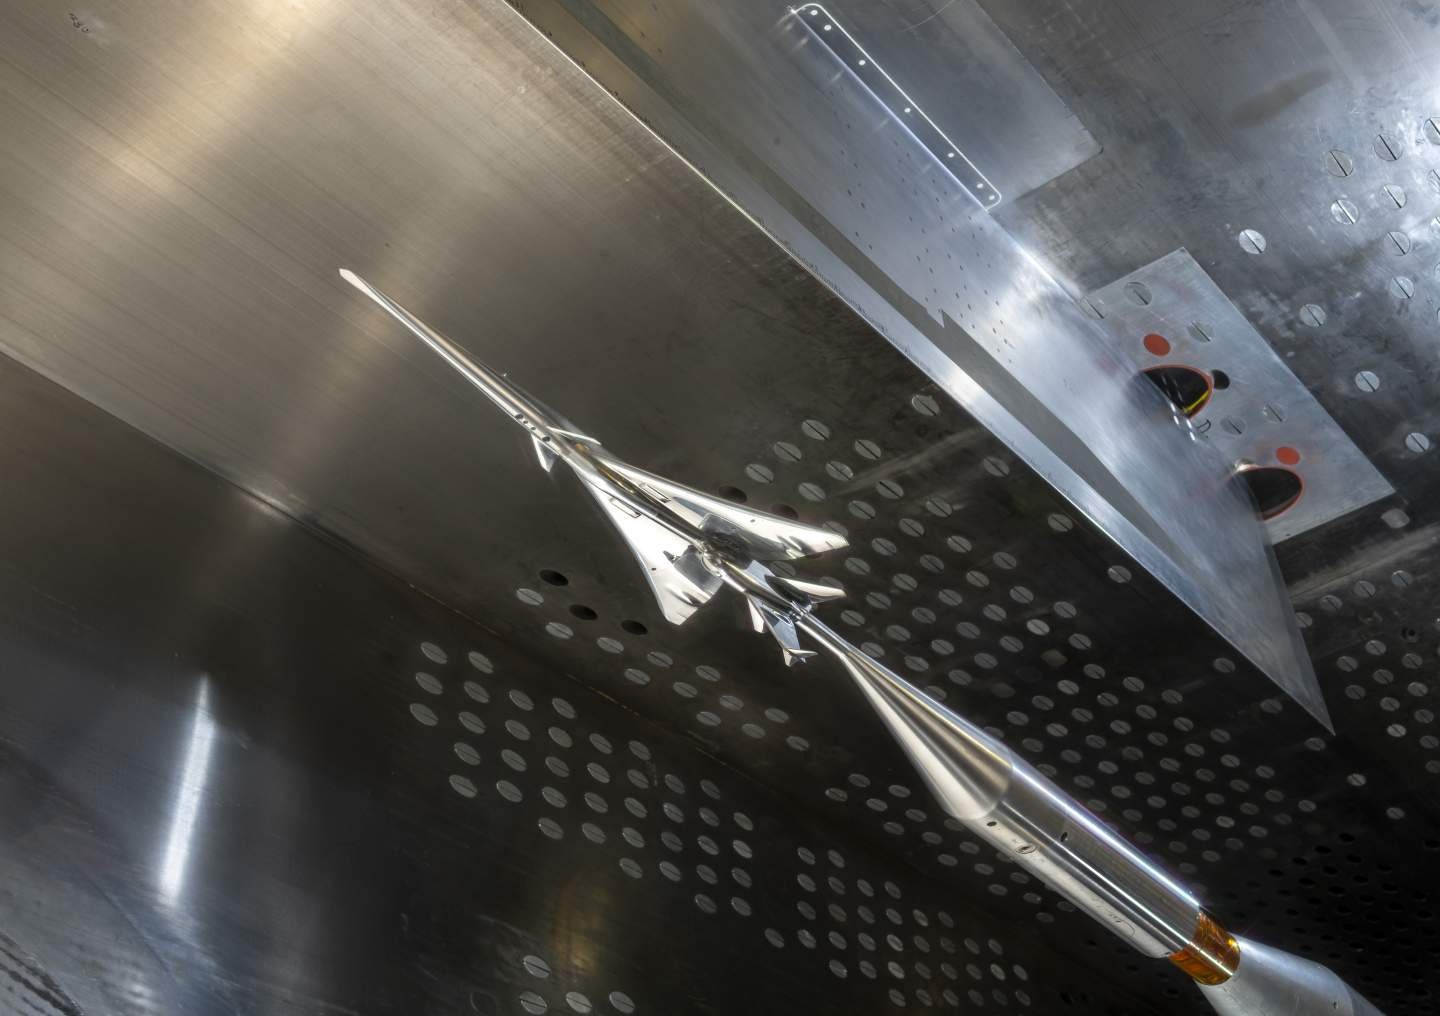 NASA’s slippery X-59 supersonic jet aims to revolutionize air travel